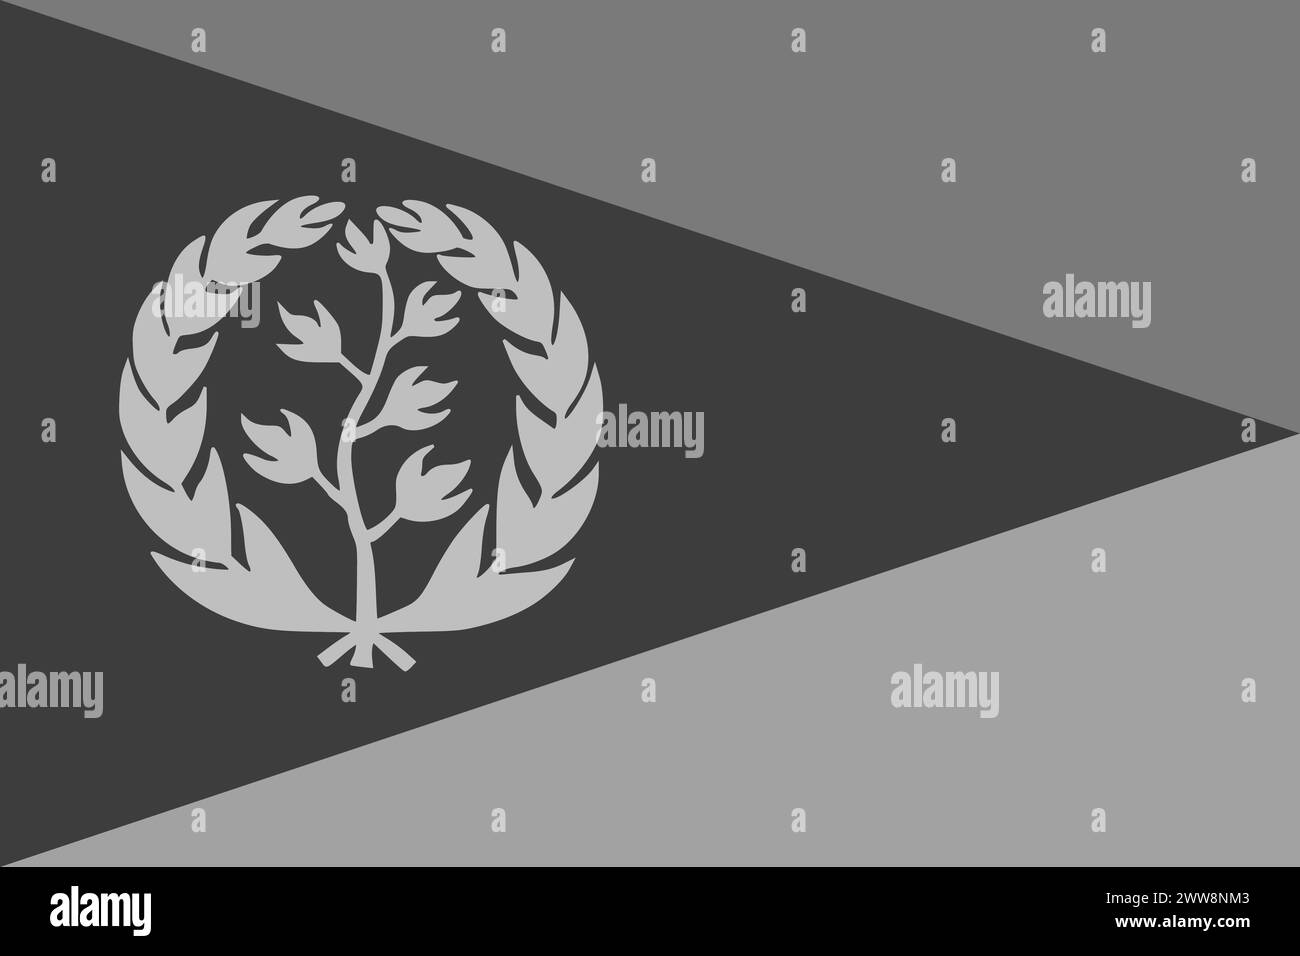 Eritrea flag - greyscale monochrome vector illustration. Flag in black and white Stock Vector